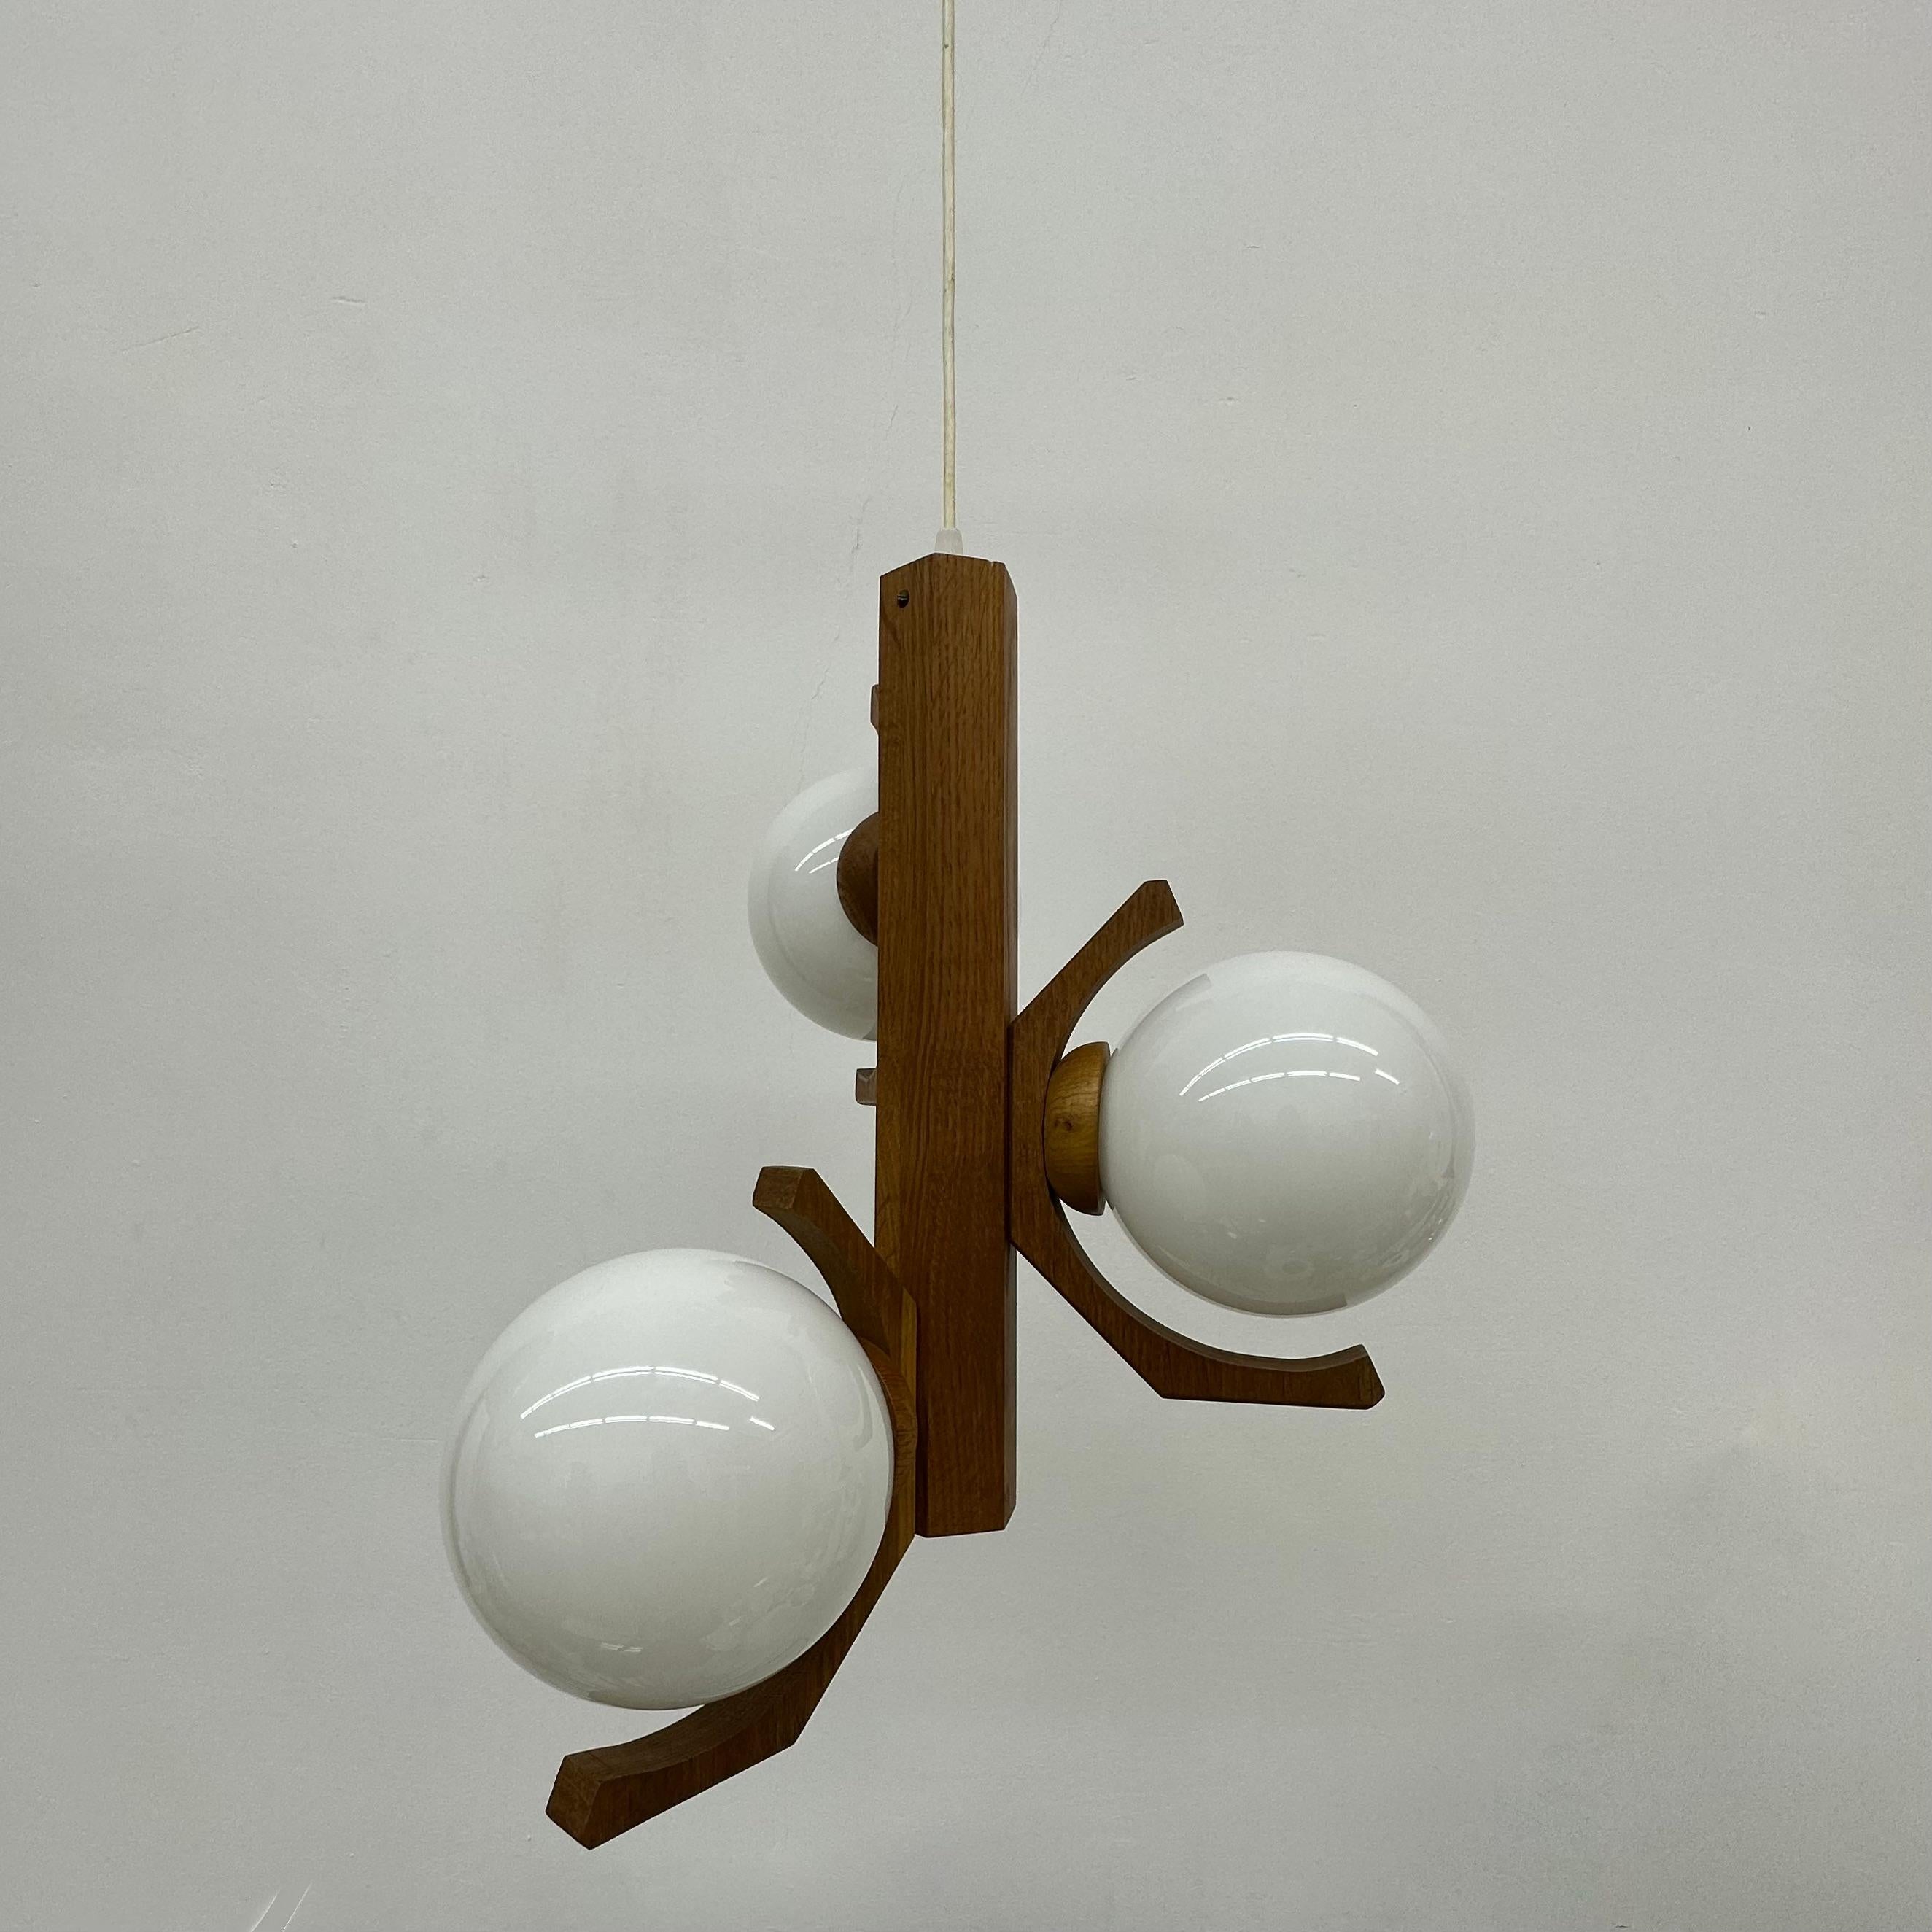 Bony design hanging lamp Dutch design , 1980’s

Dimensions: 90 cm H , 40 cm Diameter
Manufacturer: Bony design
Material: Wood, Glas
Color: White, brown